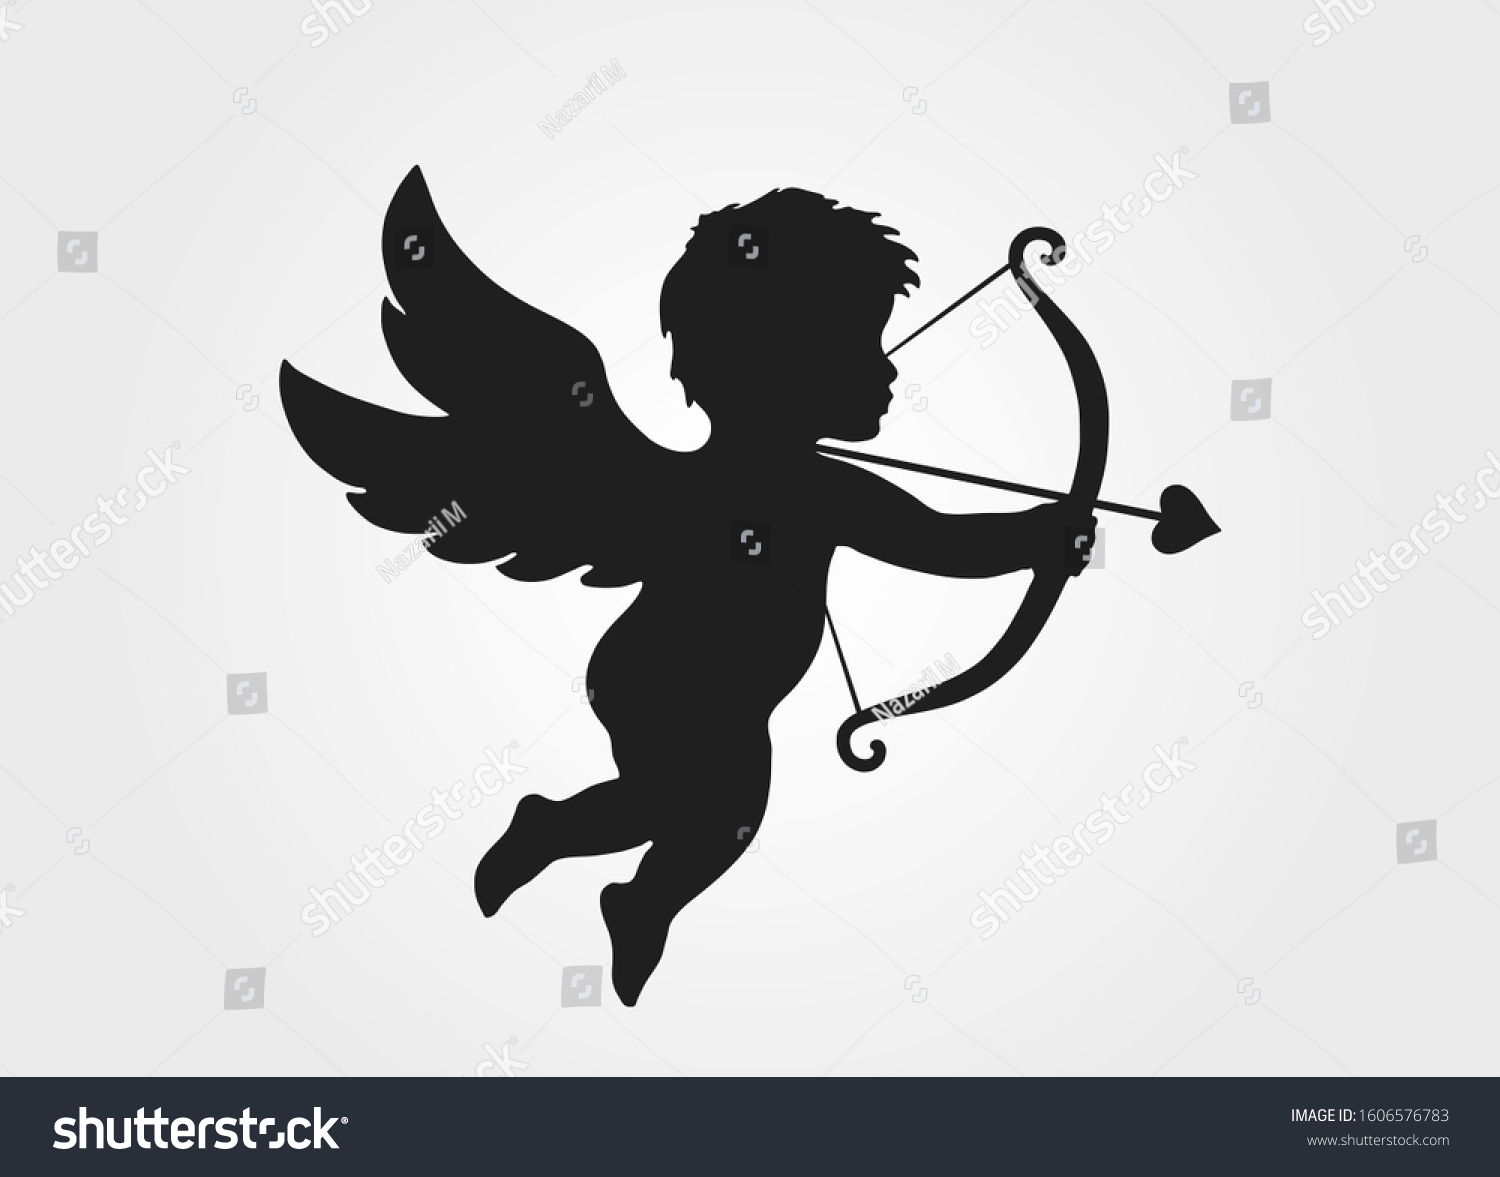 Cute Cupid Bow Arrow Love Symbol Stock Vector Royalty Free 1606576783 0537